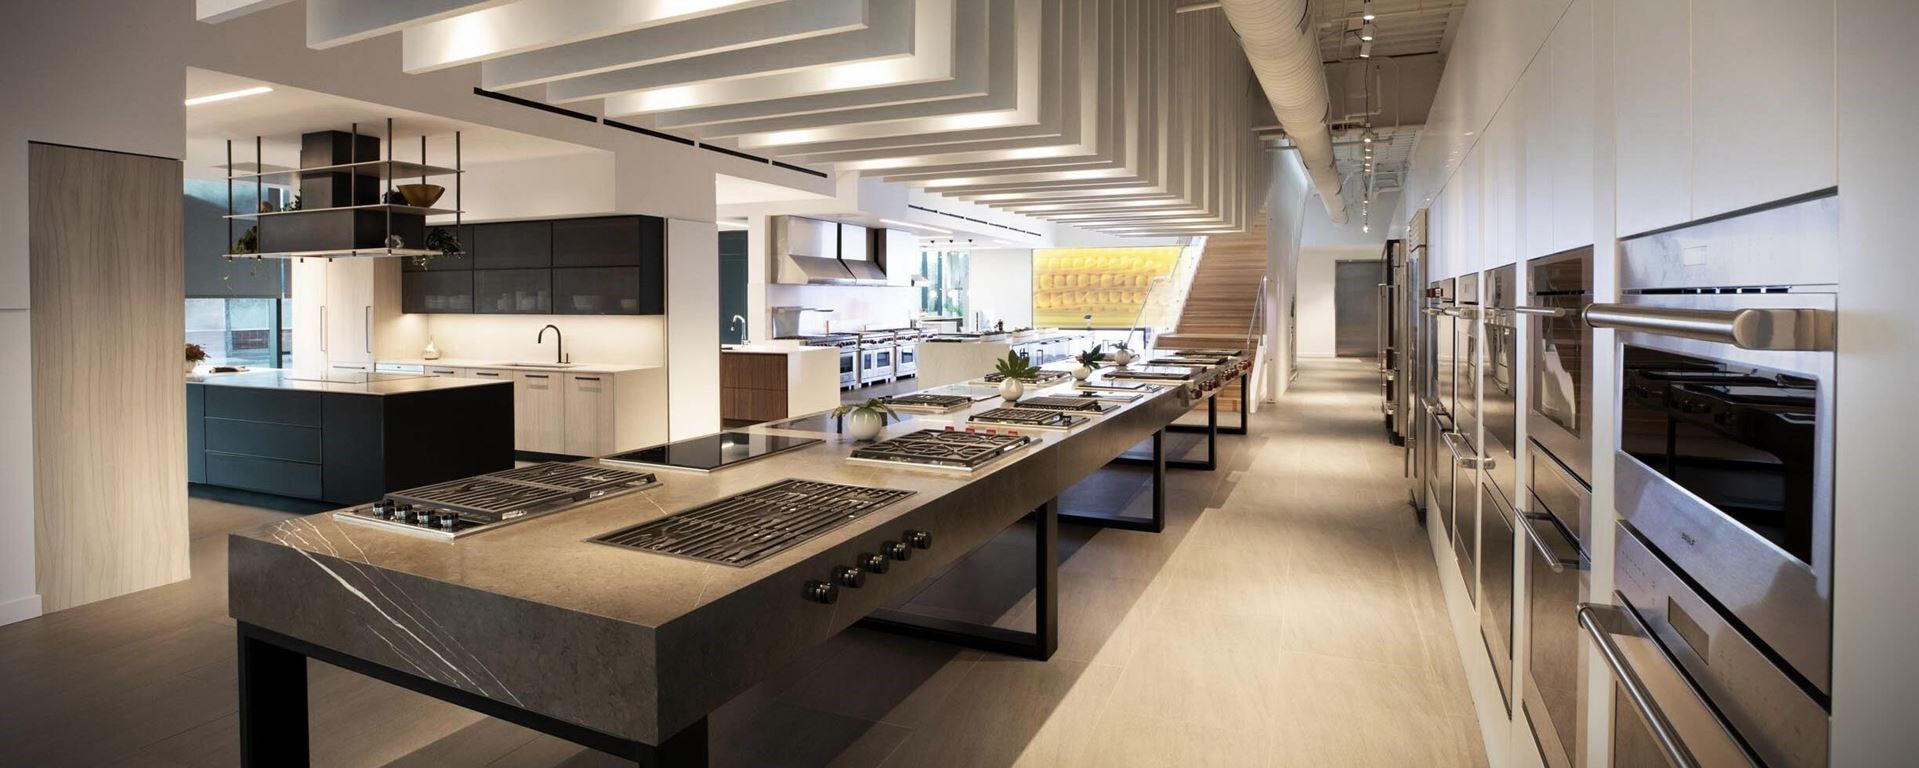 Explore luxury kitchen appliances in person at the Sub-Zero, Wolf, and Cove Showroom located in Denver, Colorado